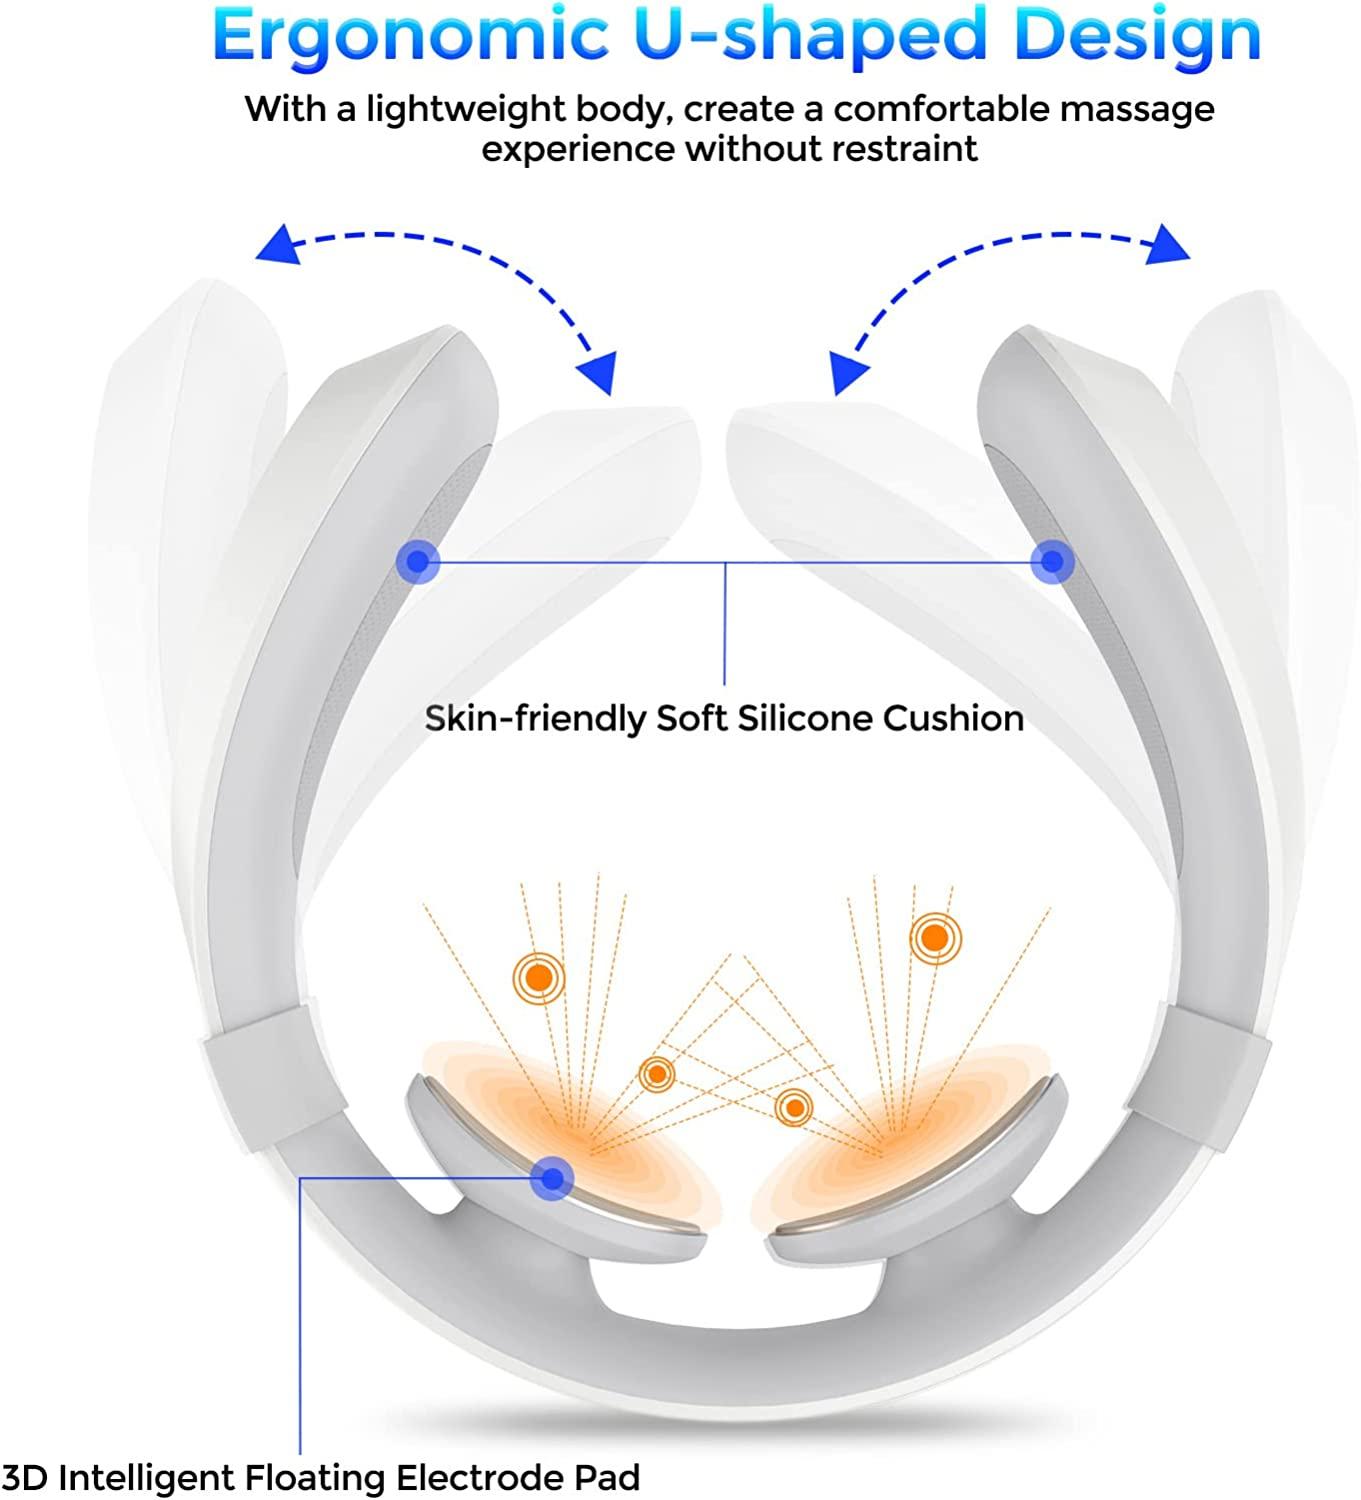 Intelligent Neck Massager, Cordless Neck Massager with Heat , Smart Neck Pendant , 6 Modes 15 Level Massage Deep Tissue for Neck Relaxing